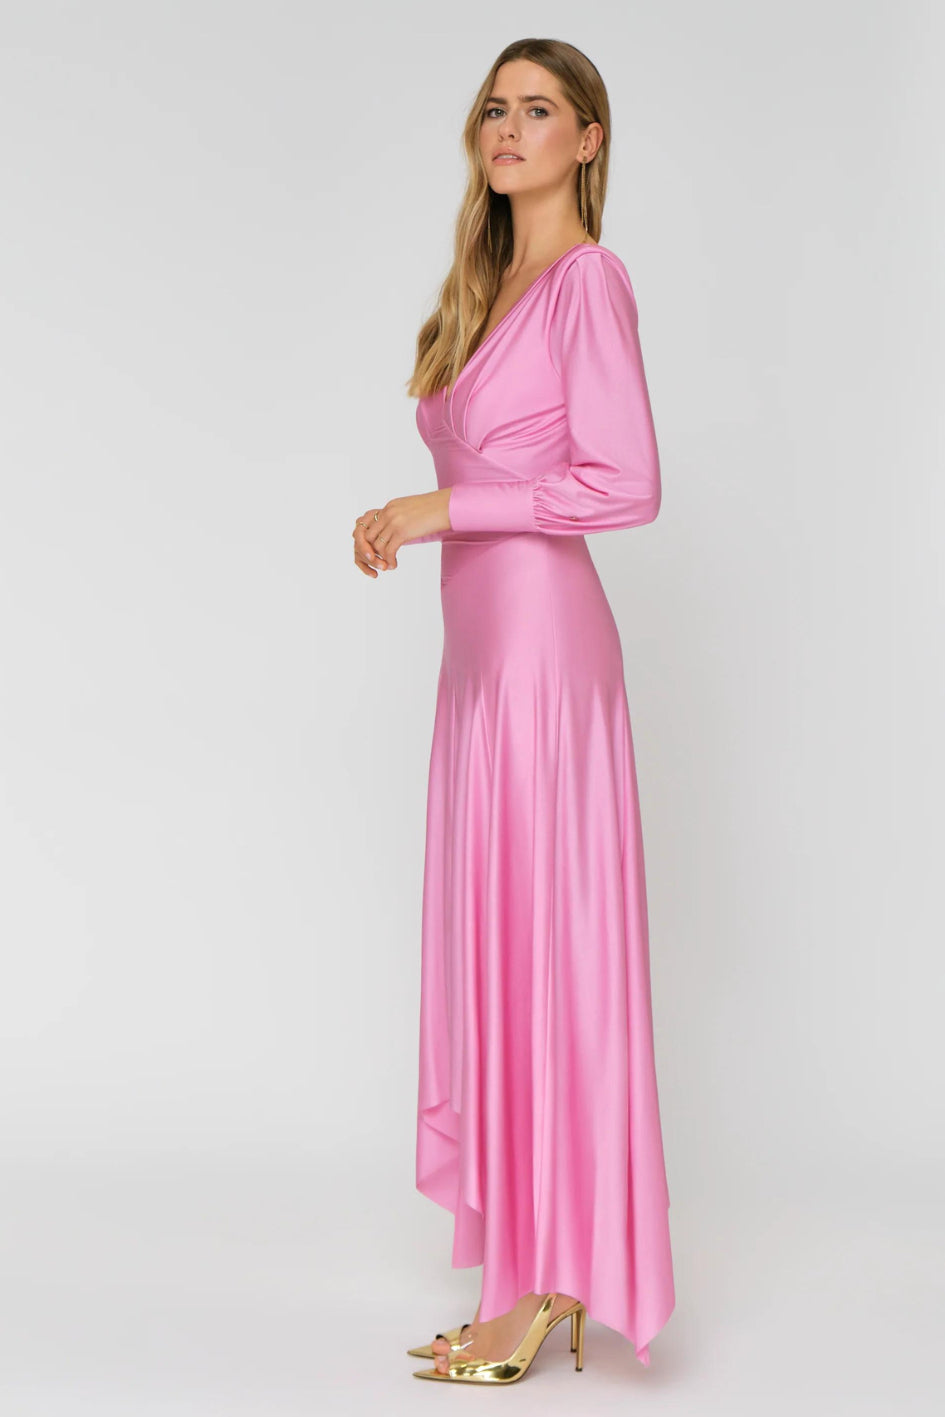 Pink Scintilla Dress